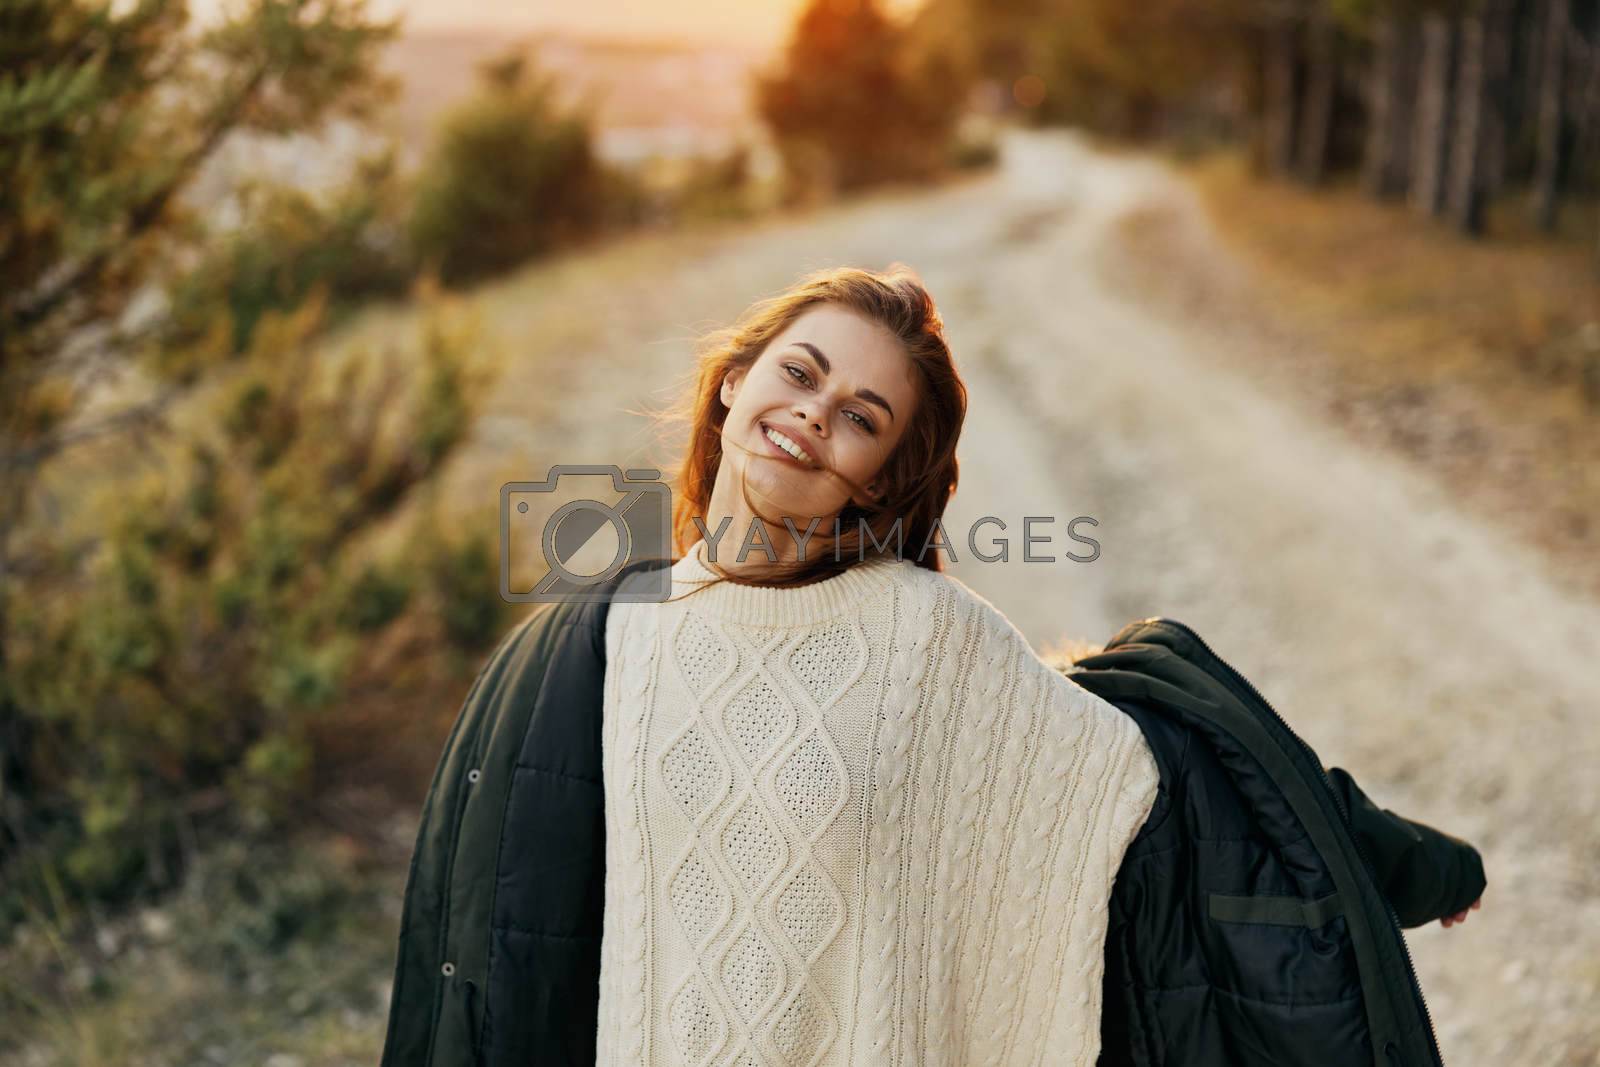 Woman jackets outdoors smile fresh air travel fun. High quality photo